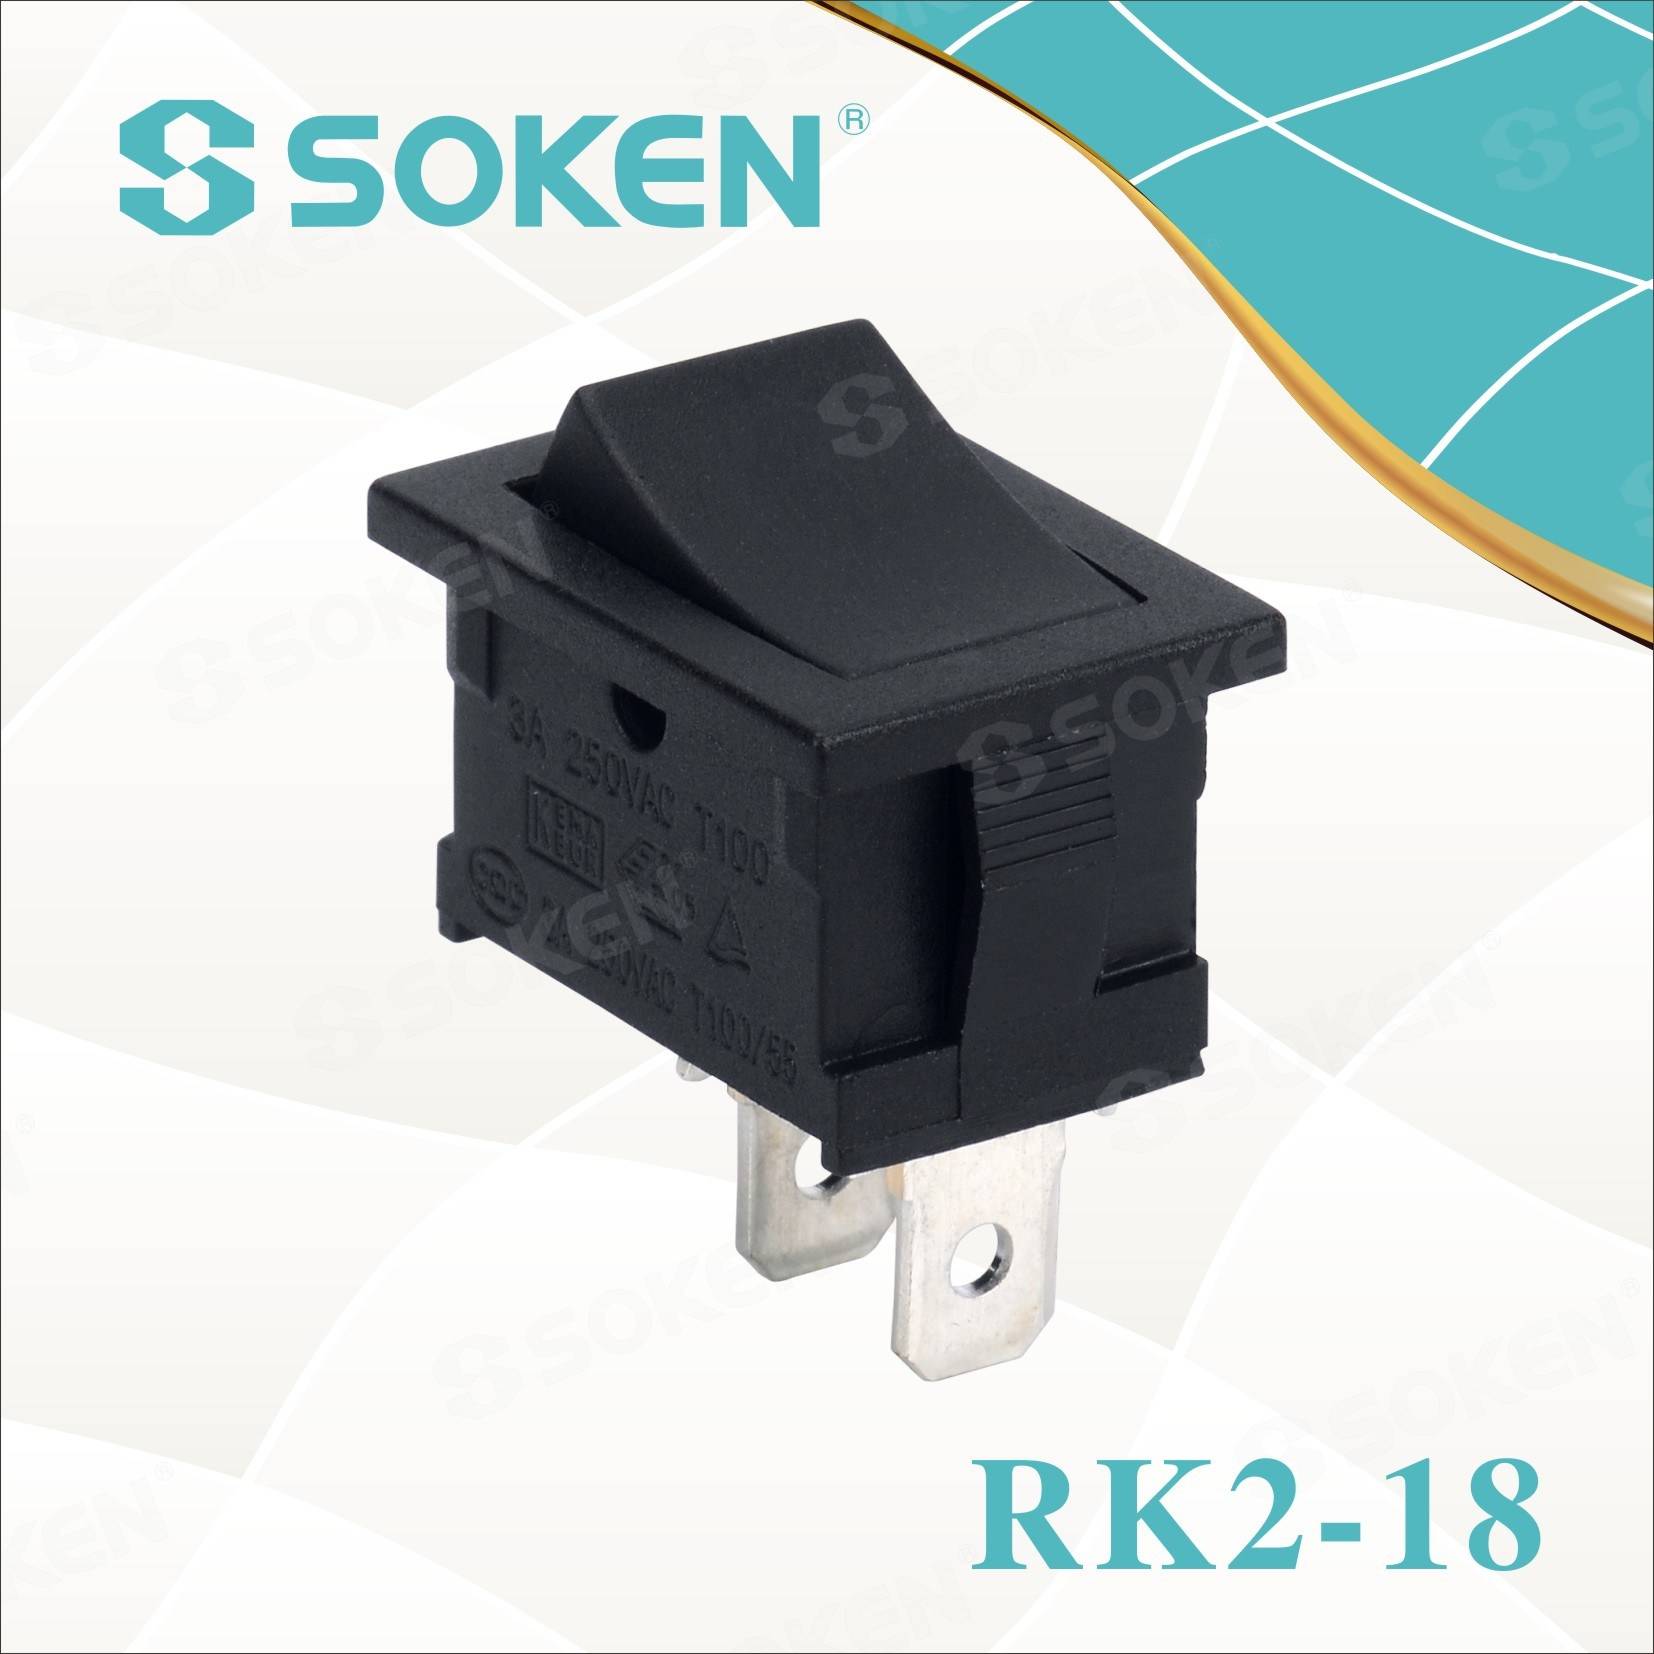 China Wholesale 240v Indicator Light -
 Sokne Rk2-18 1X1b/B UL Micro Rocker Switch – Master Soken Electrical